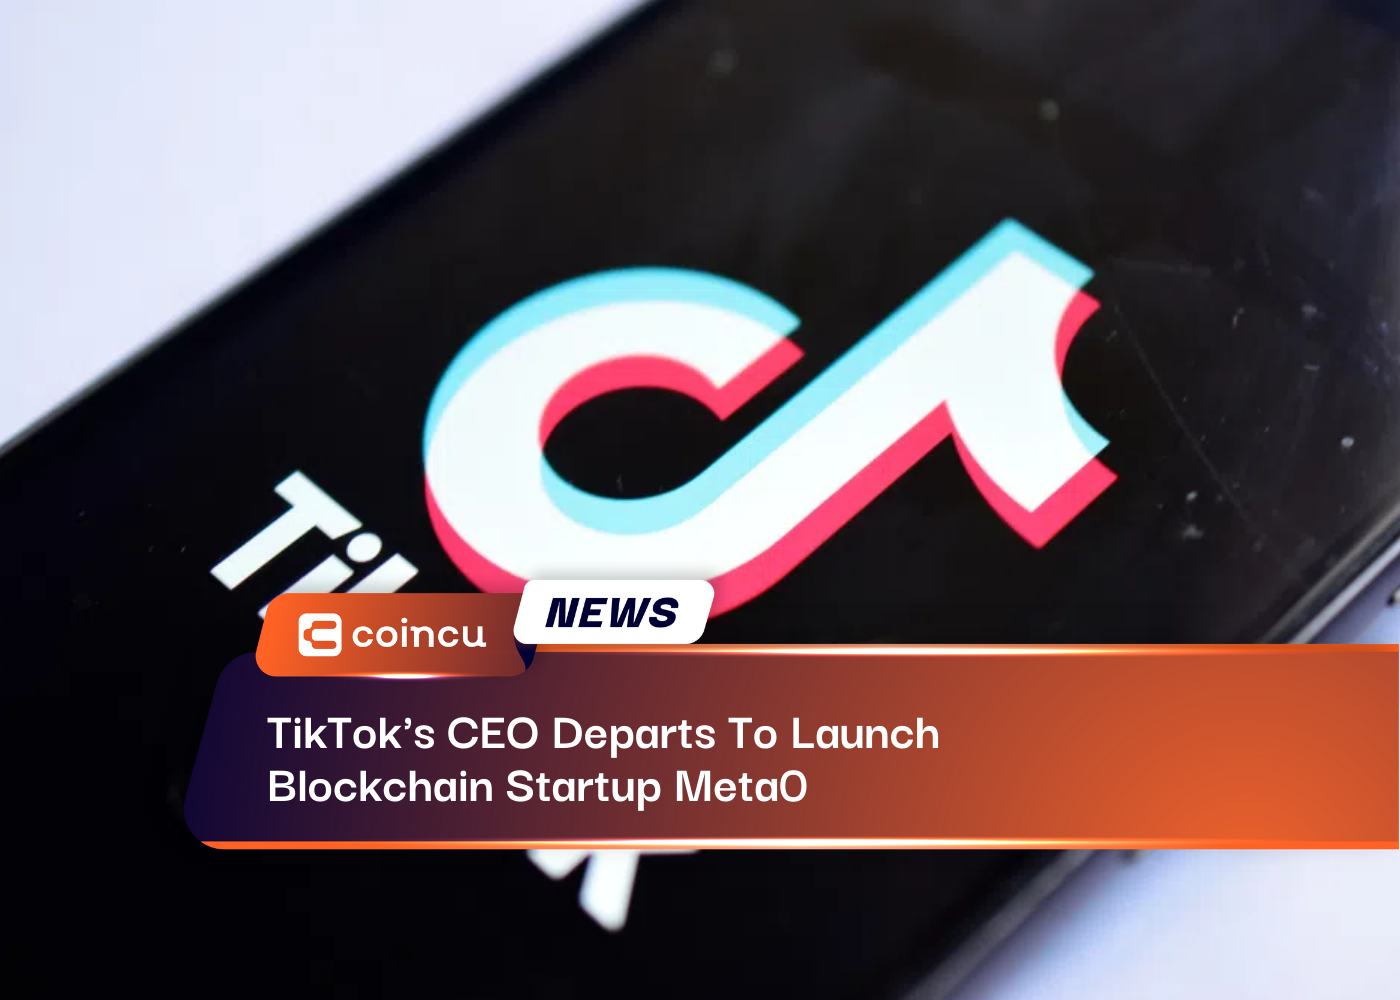 TikTok's CEO Departs To Launch Blockchain Startup Meta0